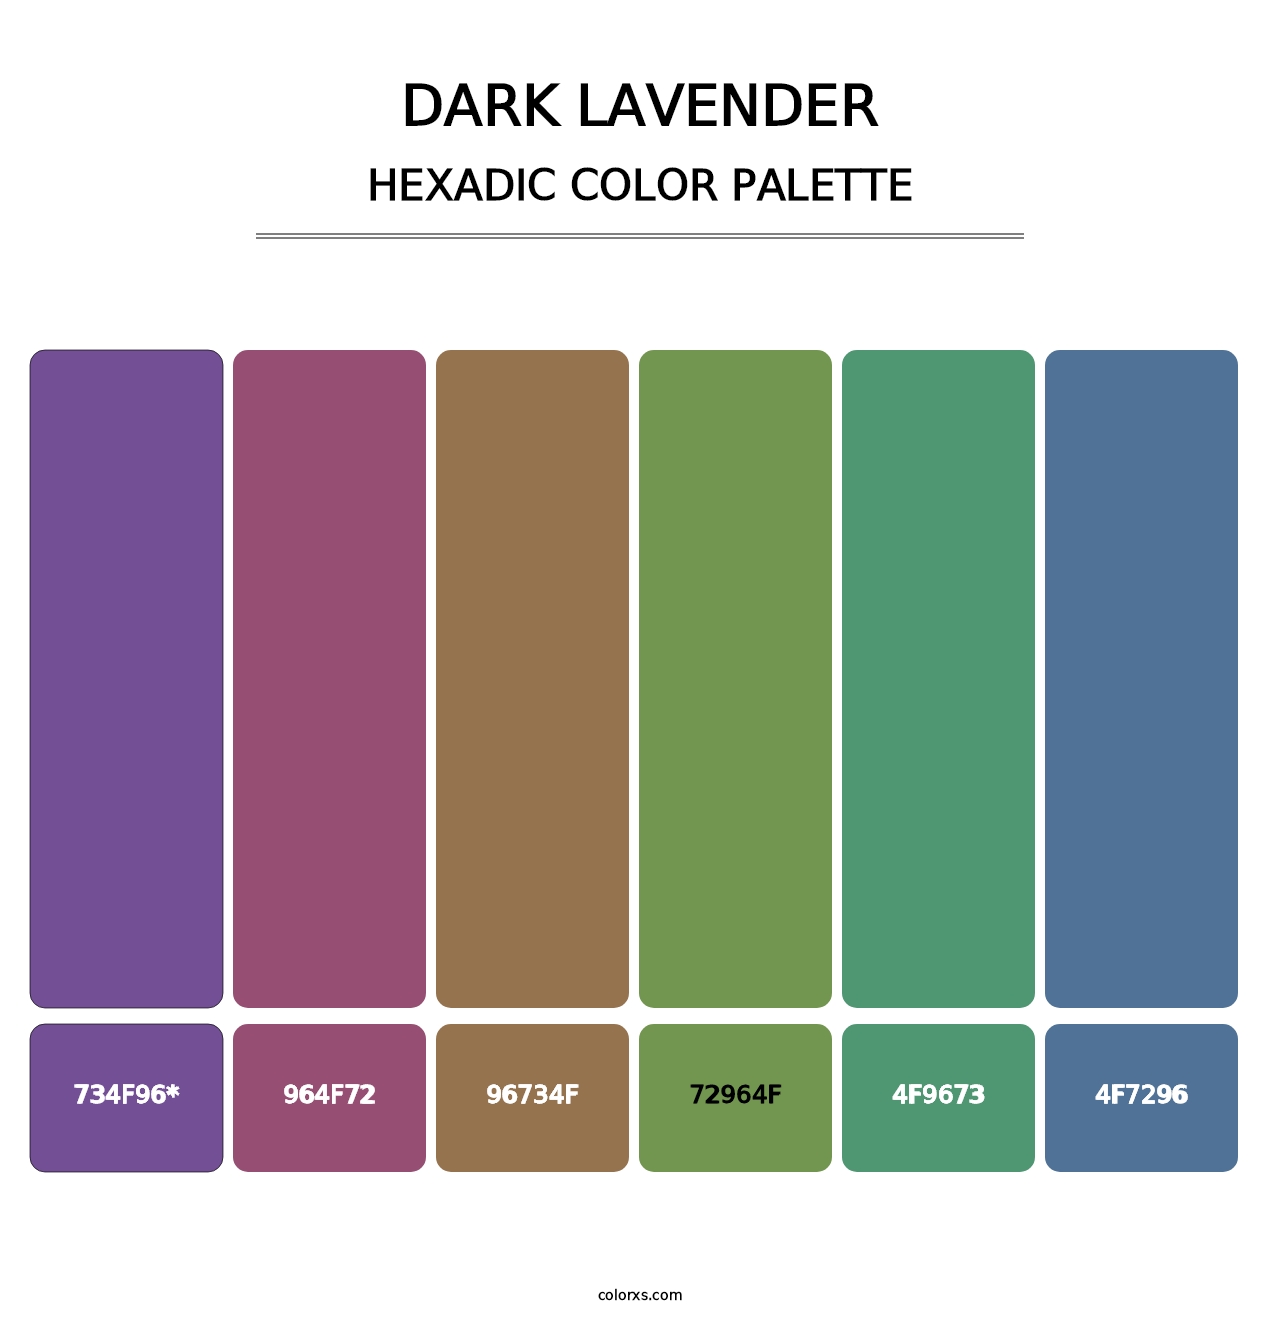 Dark Lavender - Hexadic Color Palette